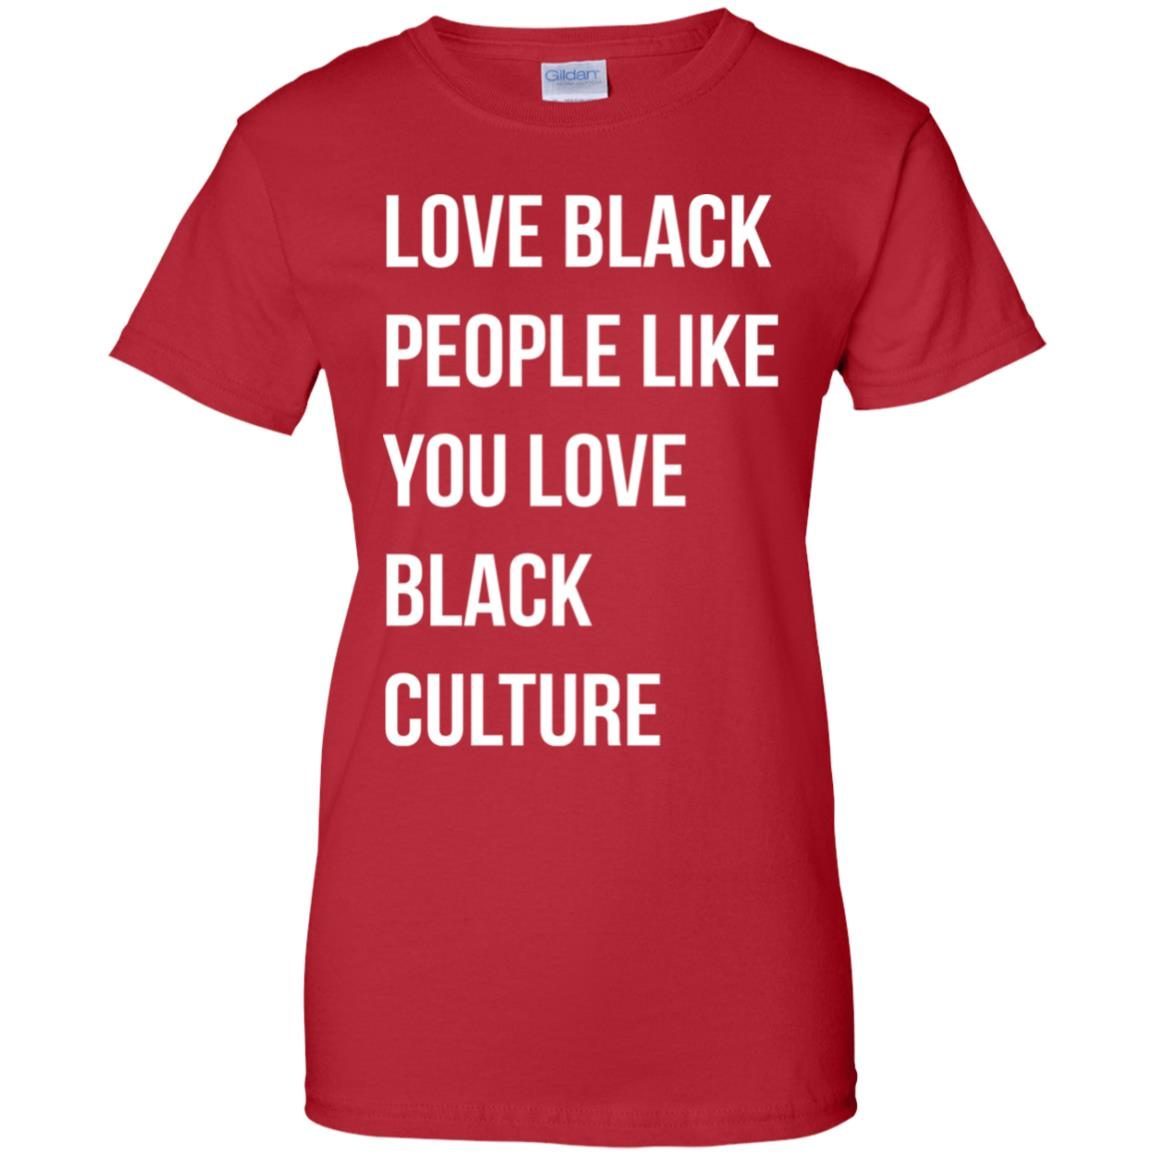 Love black people like you love black culture shirt 4